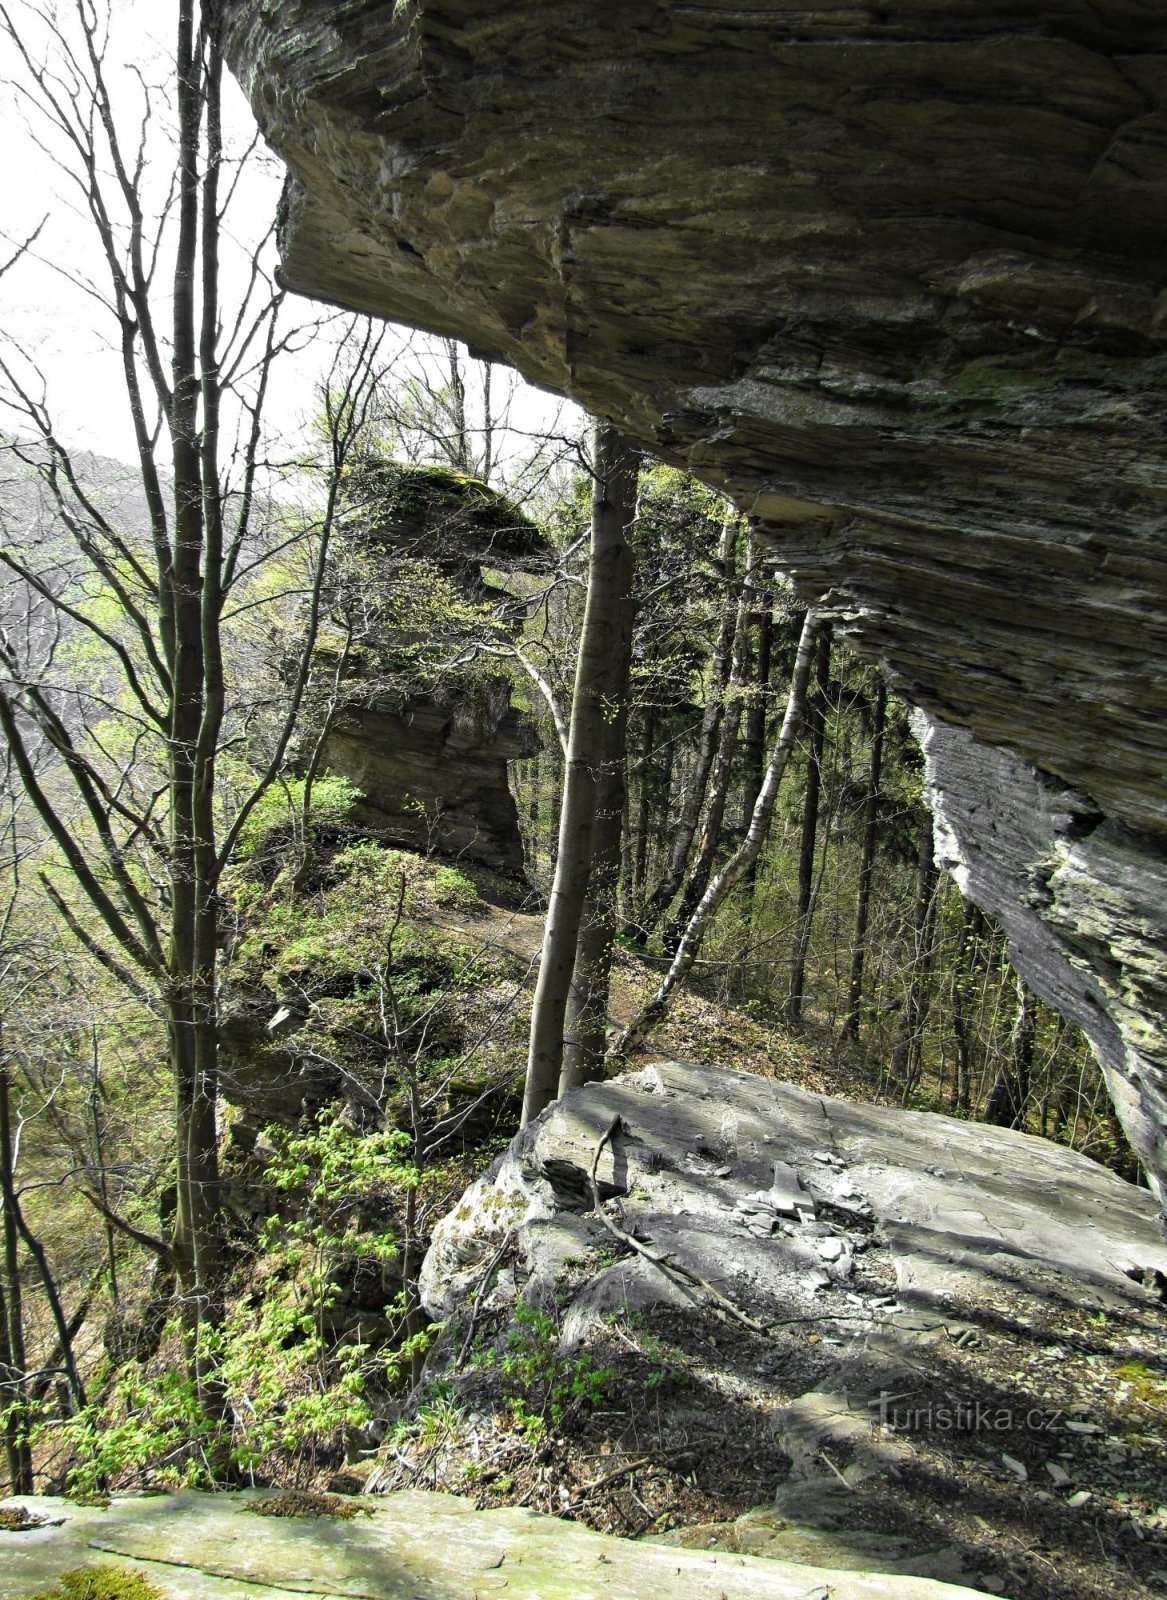 Hrube Jeseník の驚くべき岩石の世界から - パート 1